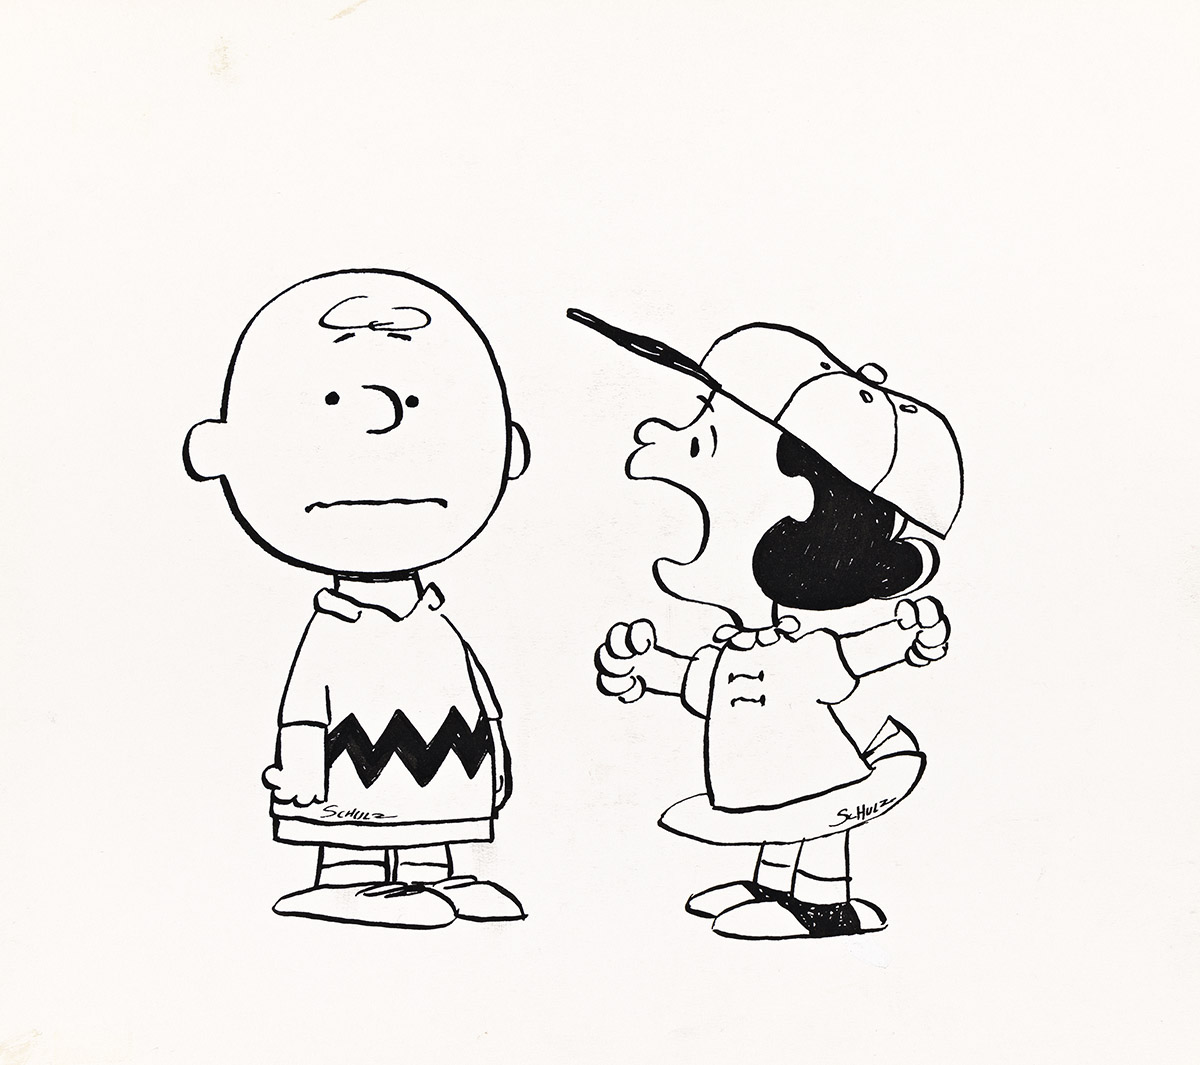 SCHULZ, CHARLES MONROE (1922-2000) The Peanuts gang.